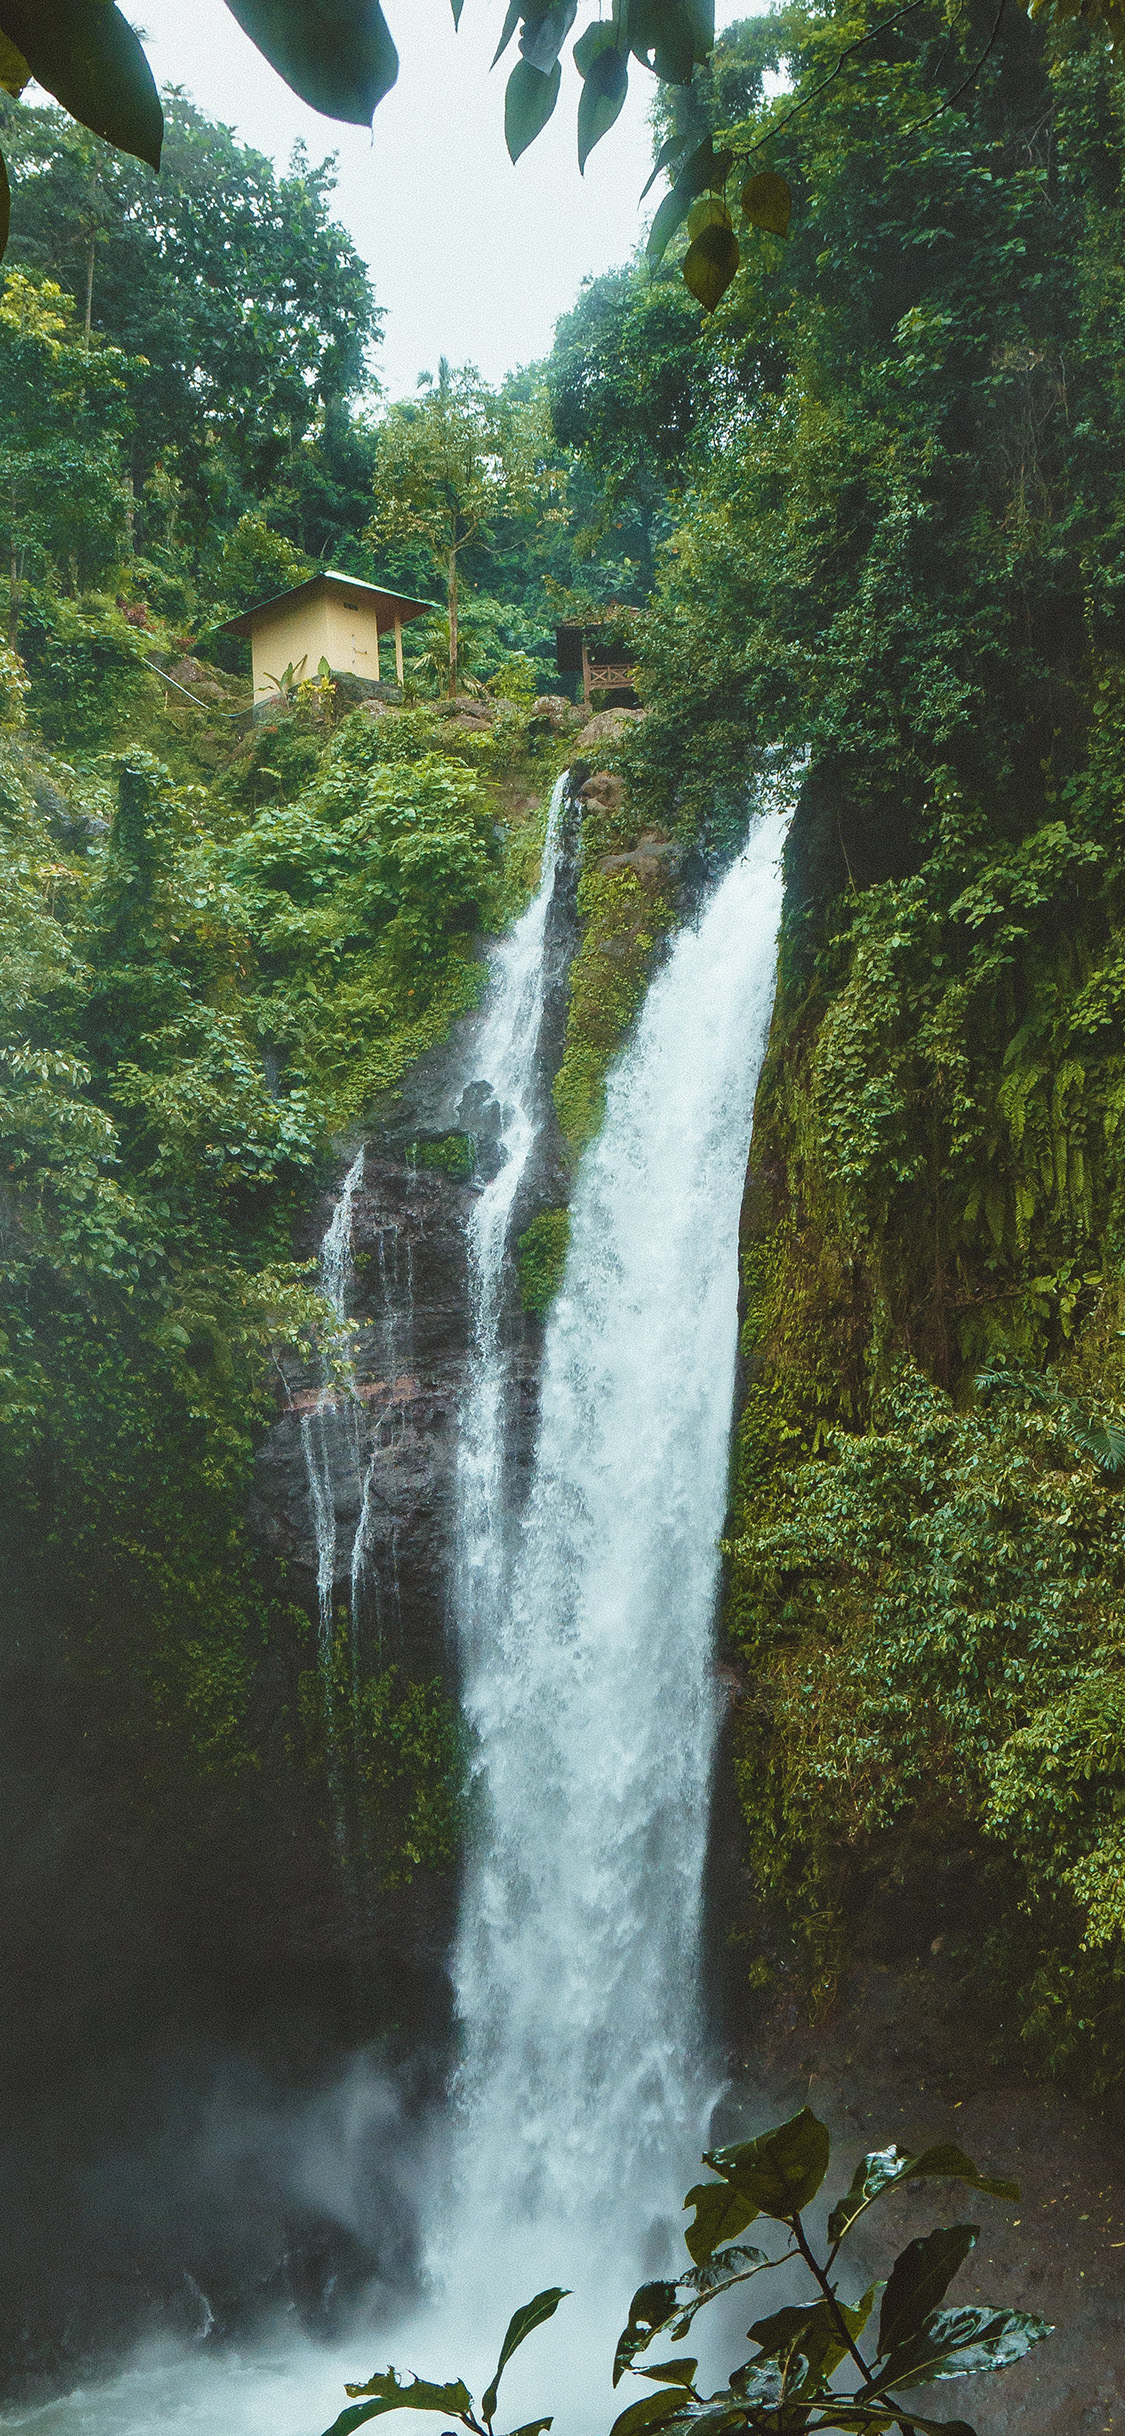 iPhone X wallpaper. waterfall summer forest river nature jungle